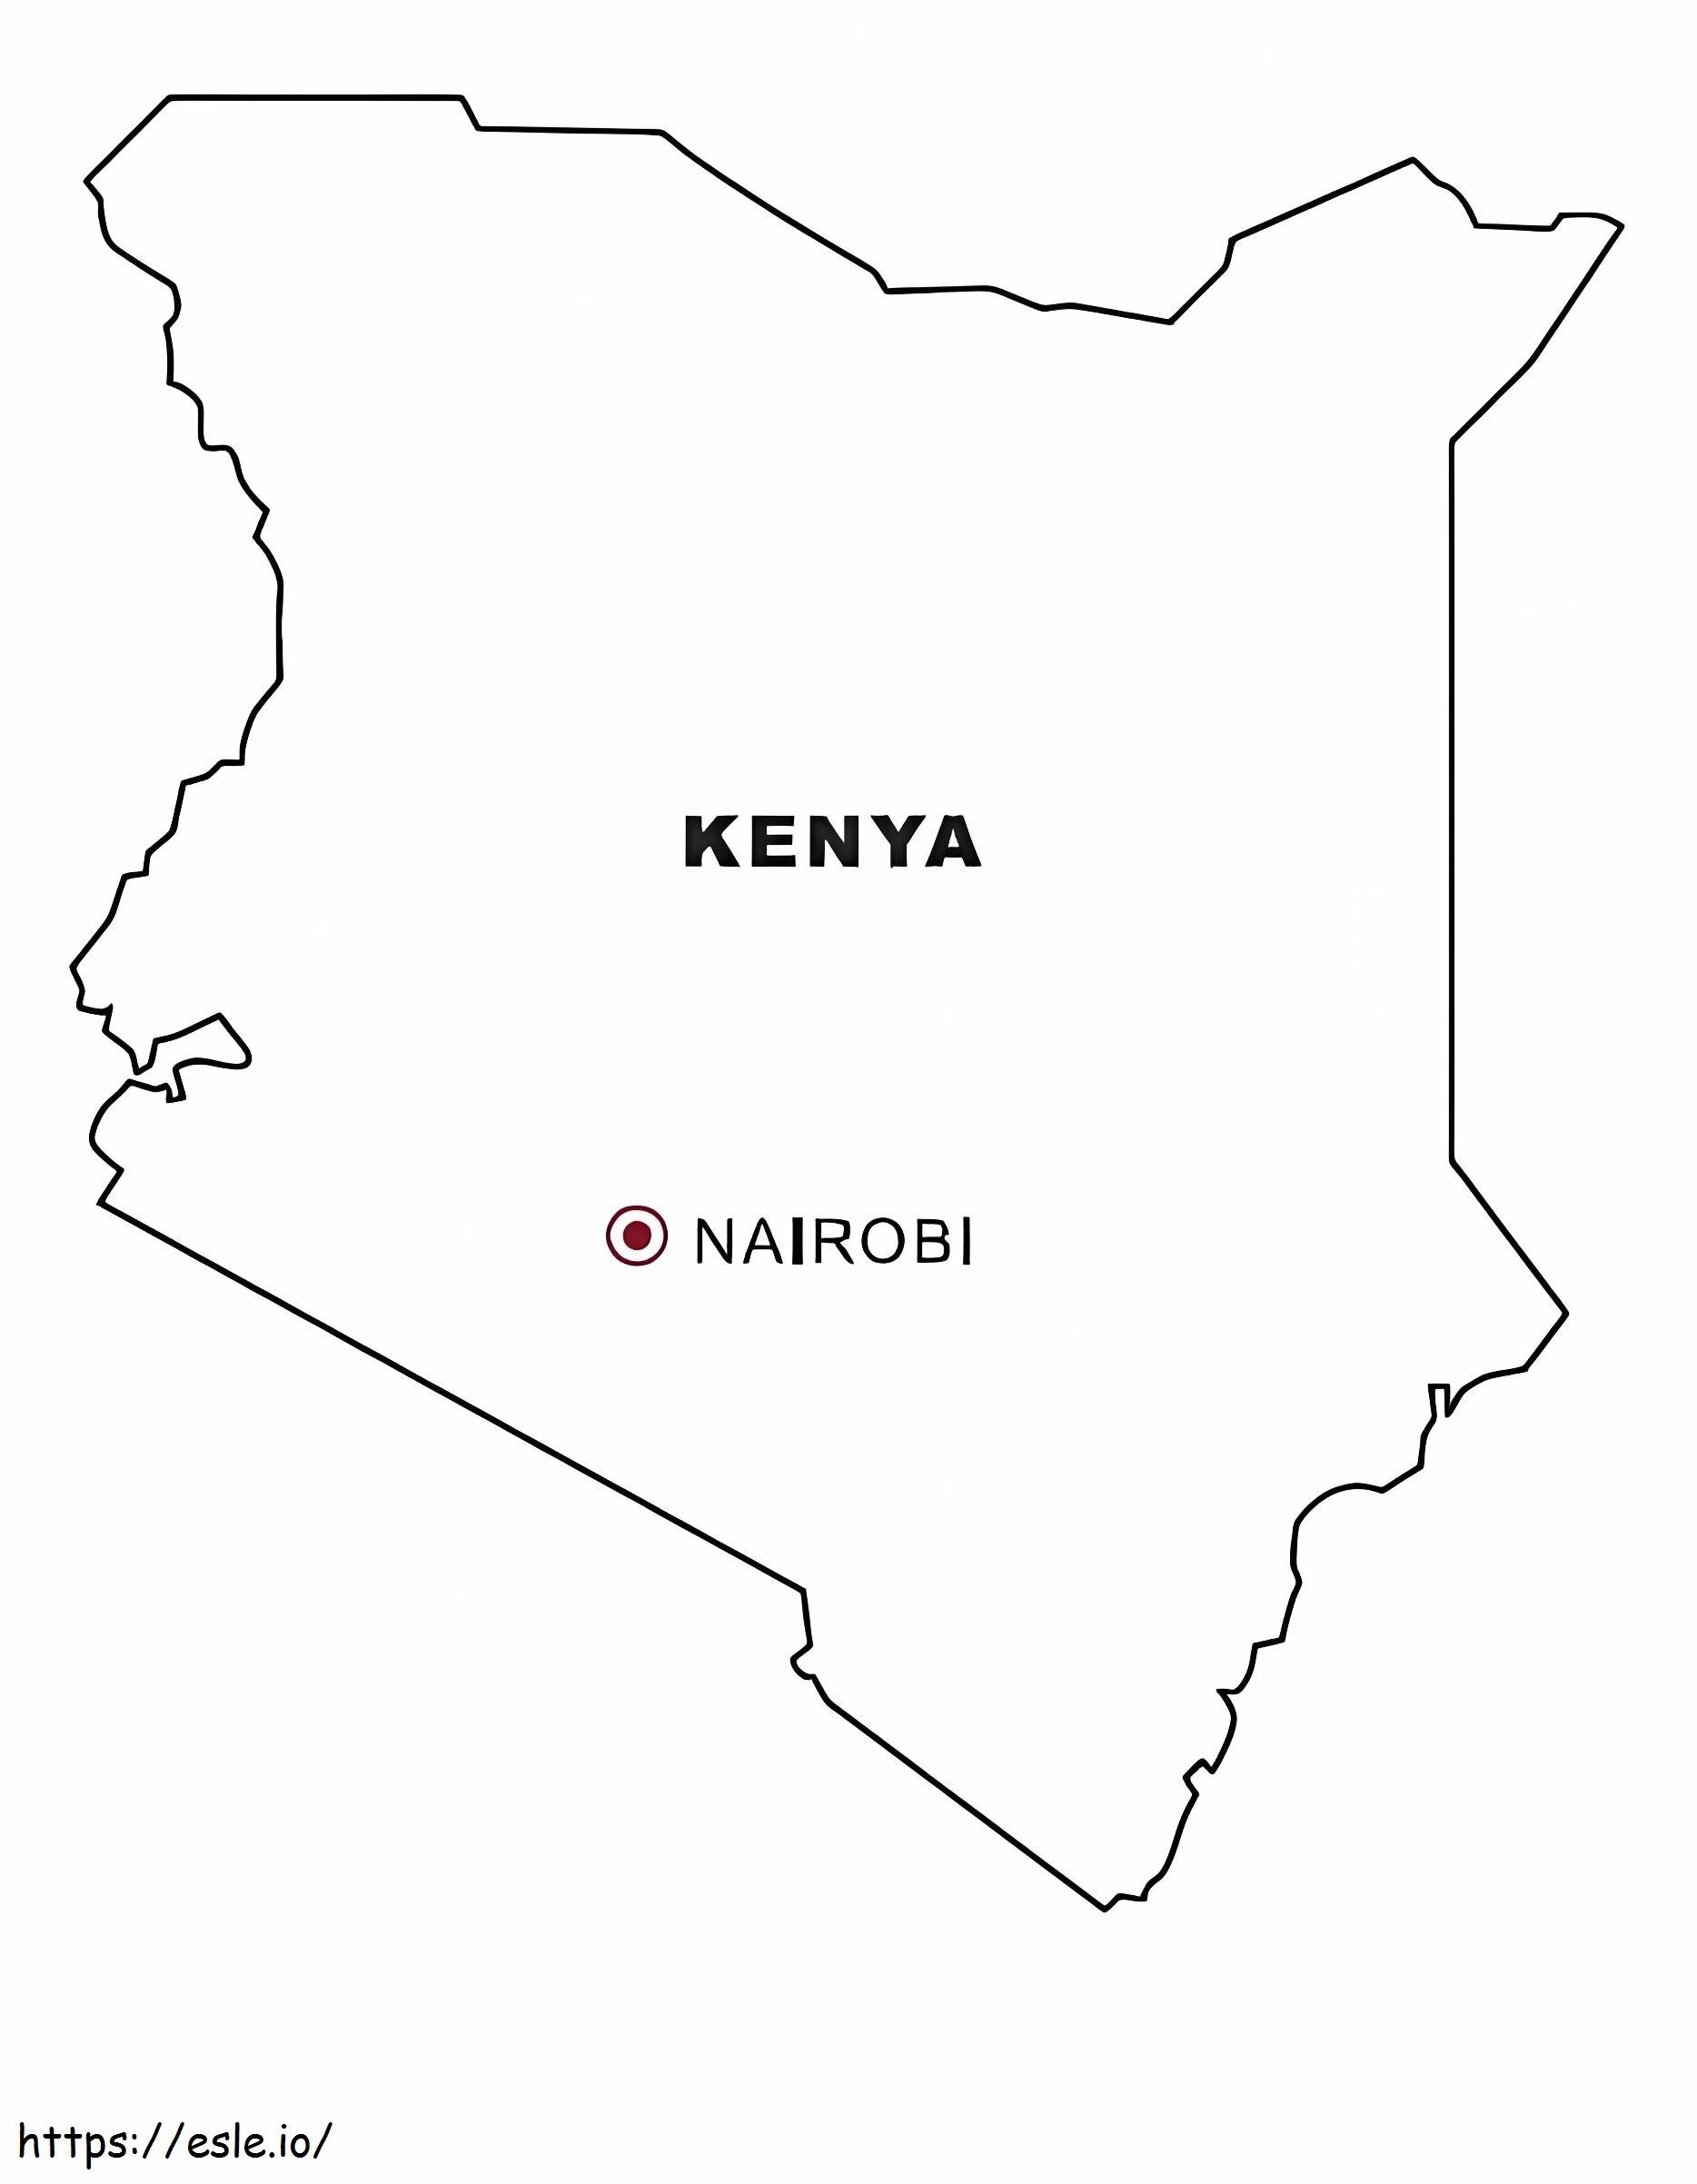 Kenya Map coloring page